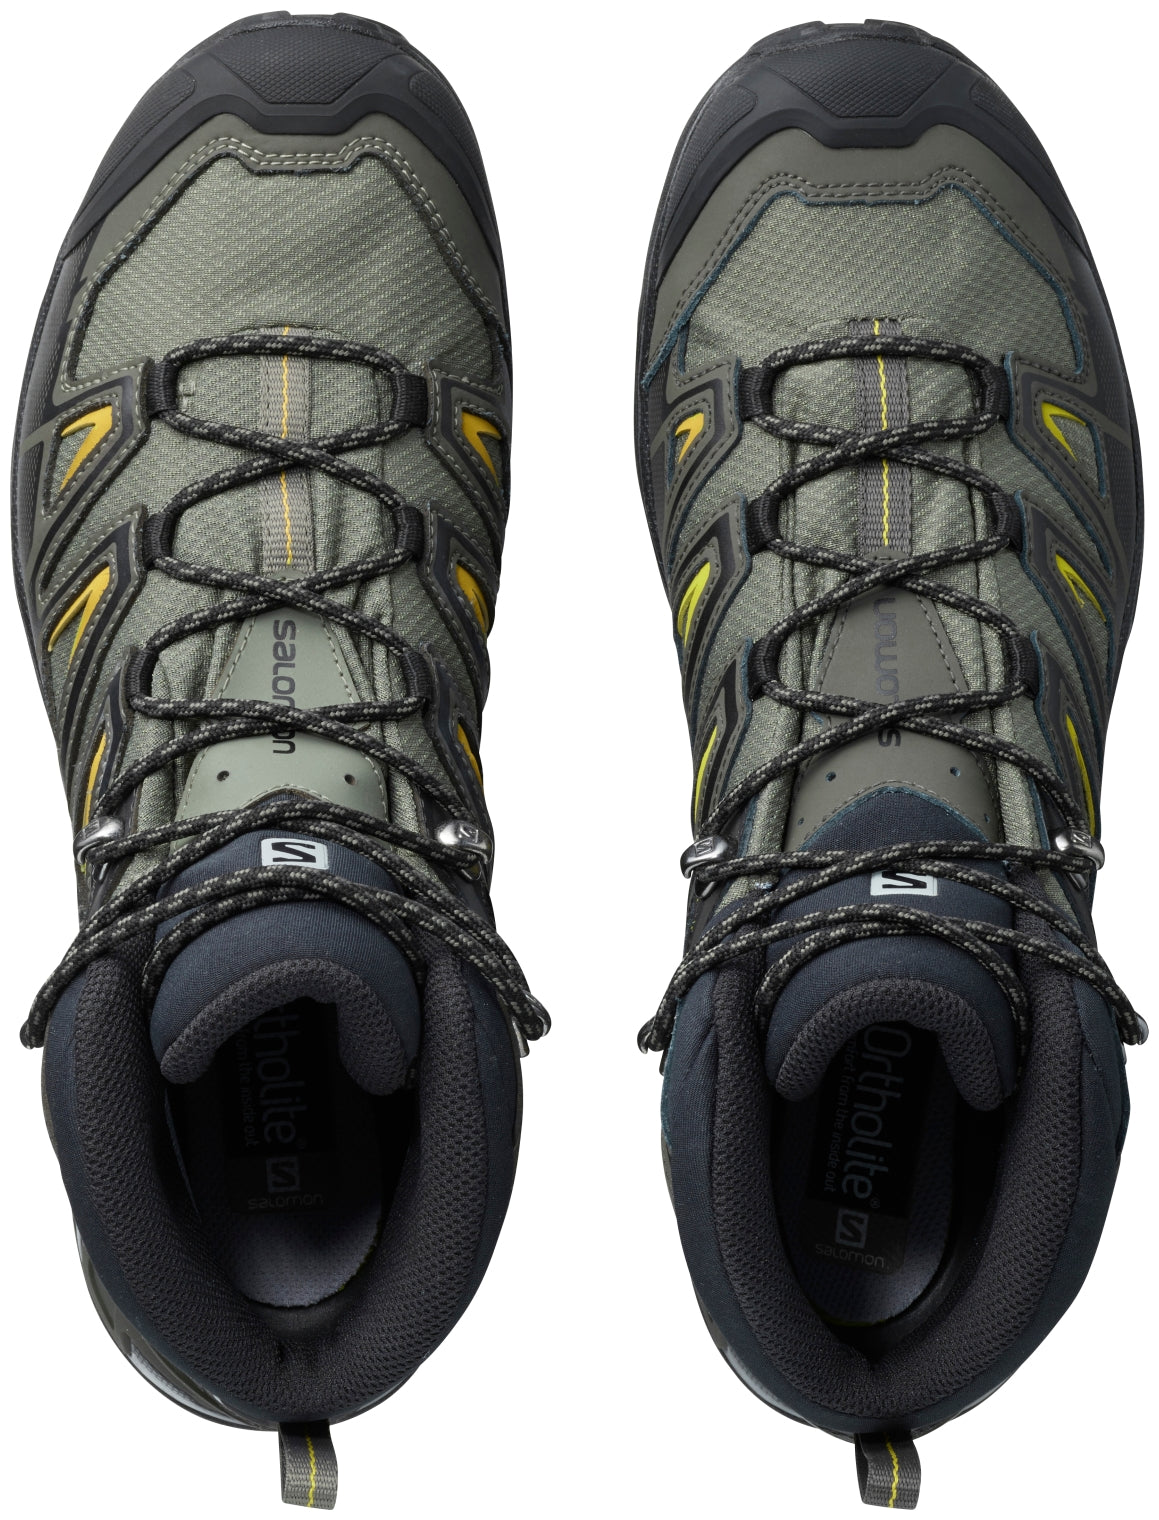 salomon men's x ultra 3 wide mid gtx hiking boots